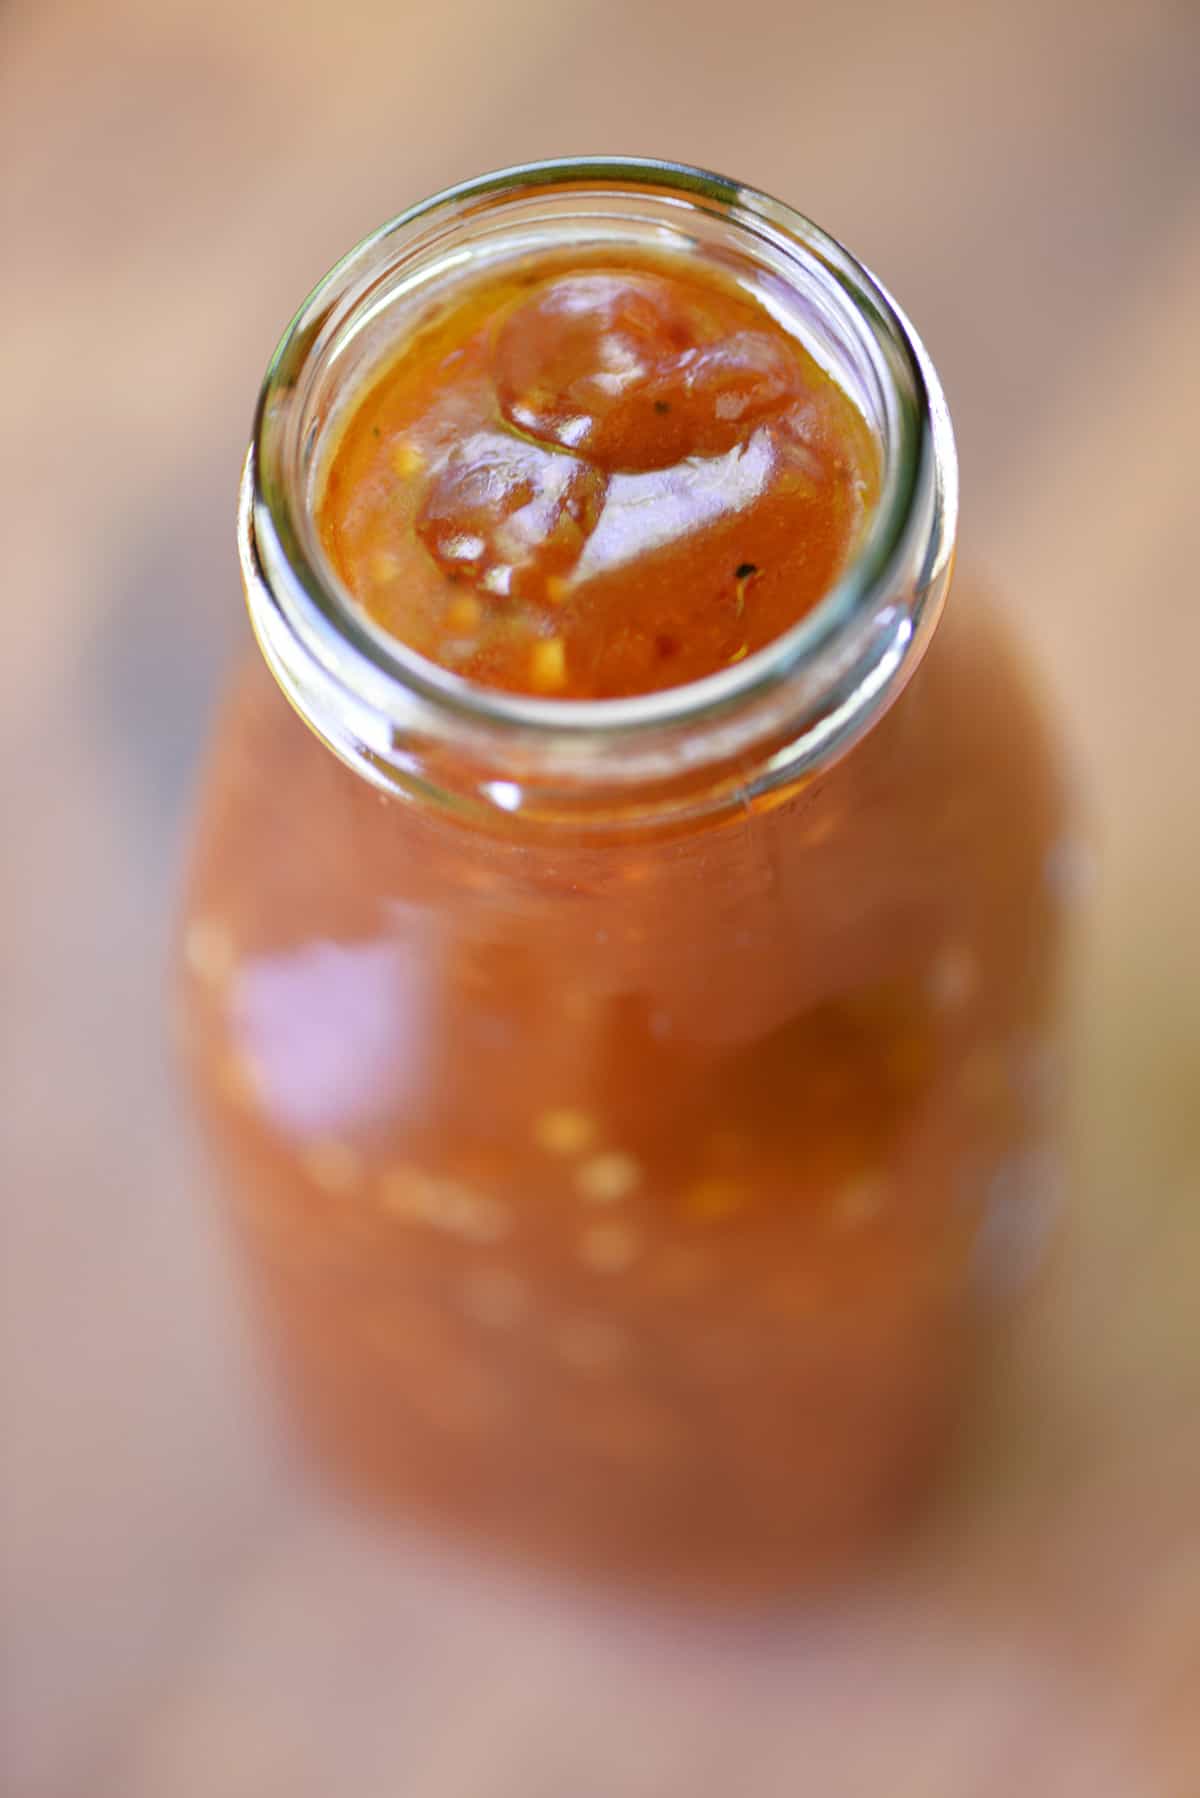 A jar of homemade stir fry sauce.